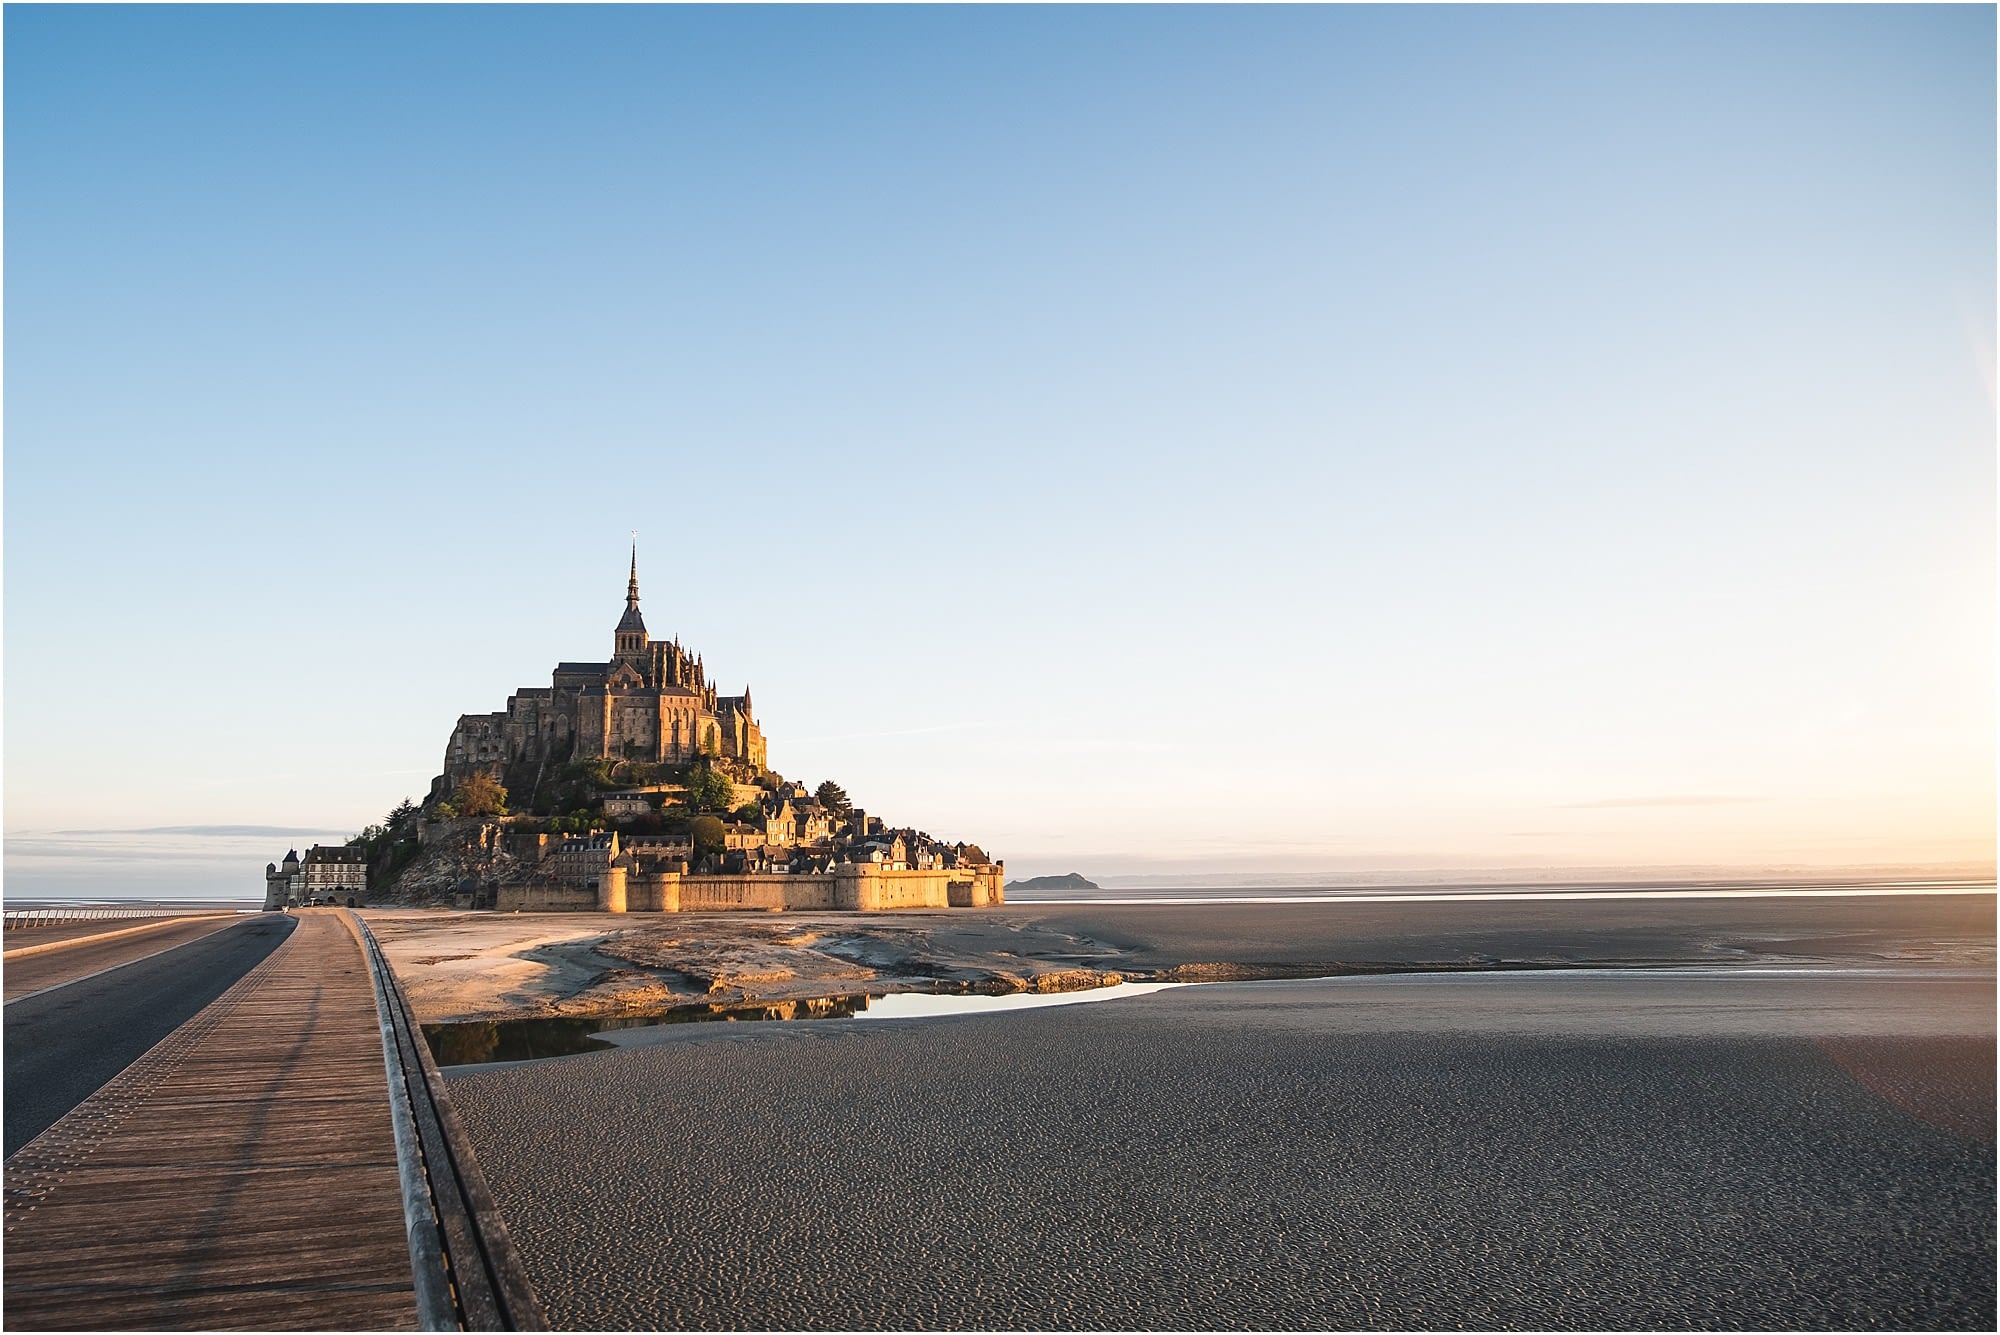 Mont Saint Michel in Normandy France